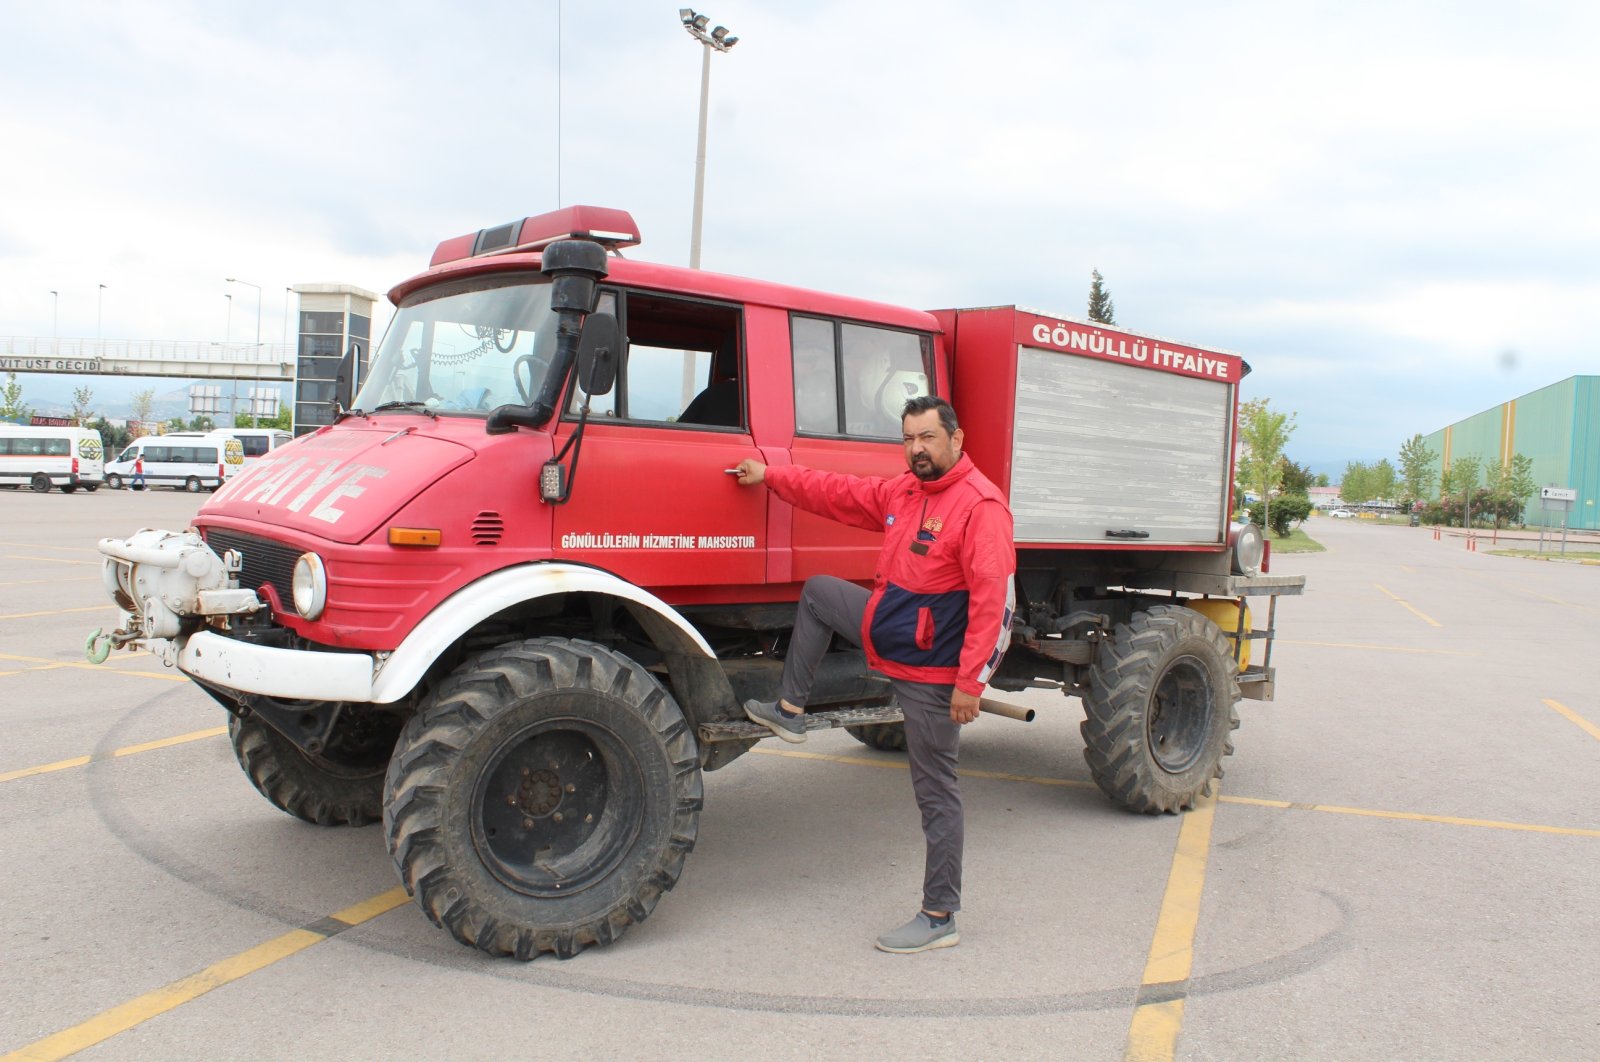 Relawan dengan truk pemadam kebakaran pribadi memadamkan api di Turki